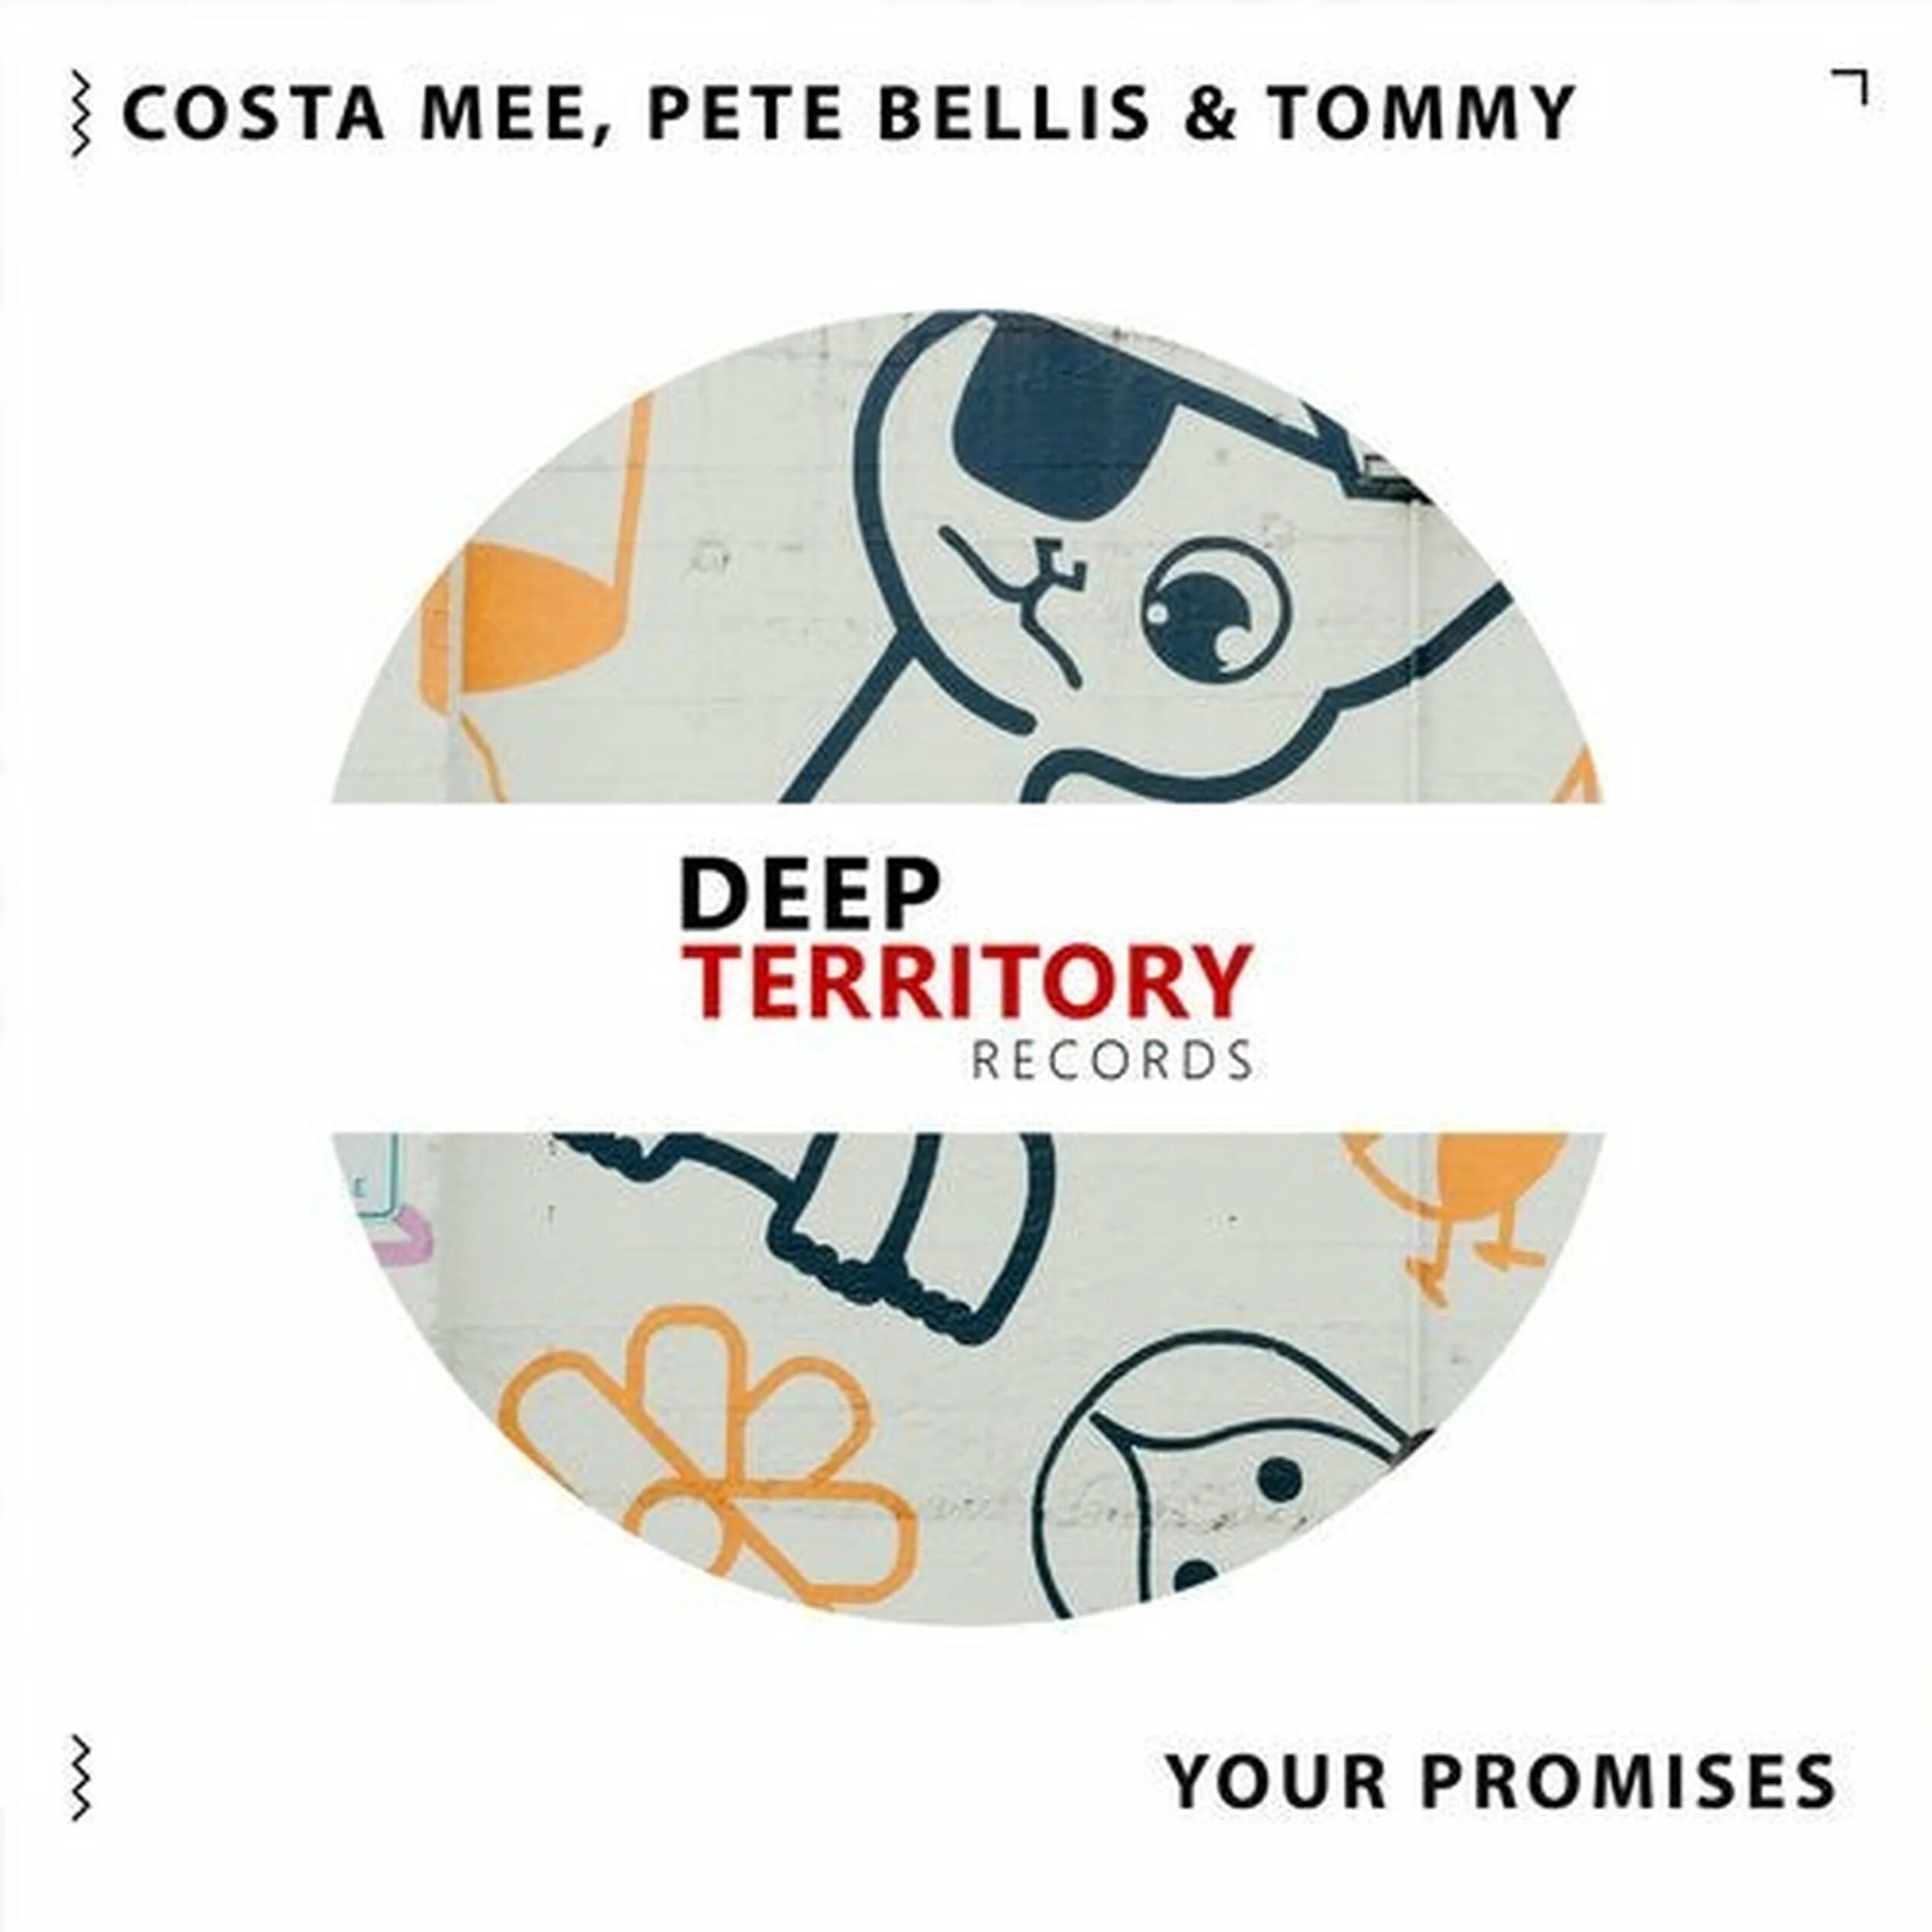 Costa mee & Pete Bellis & Tommy. Costa mee & Pete Bellis & Tommy - empty Promises. Costa mee Pete Bellis Tommy looking for you. Pete Bellis Deep Territory.